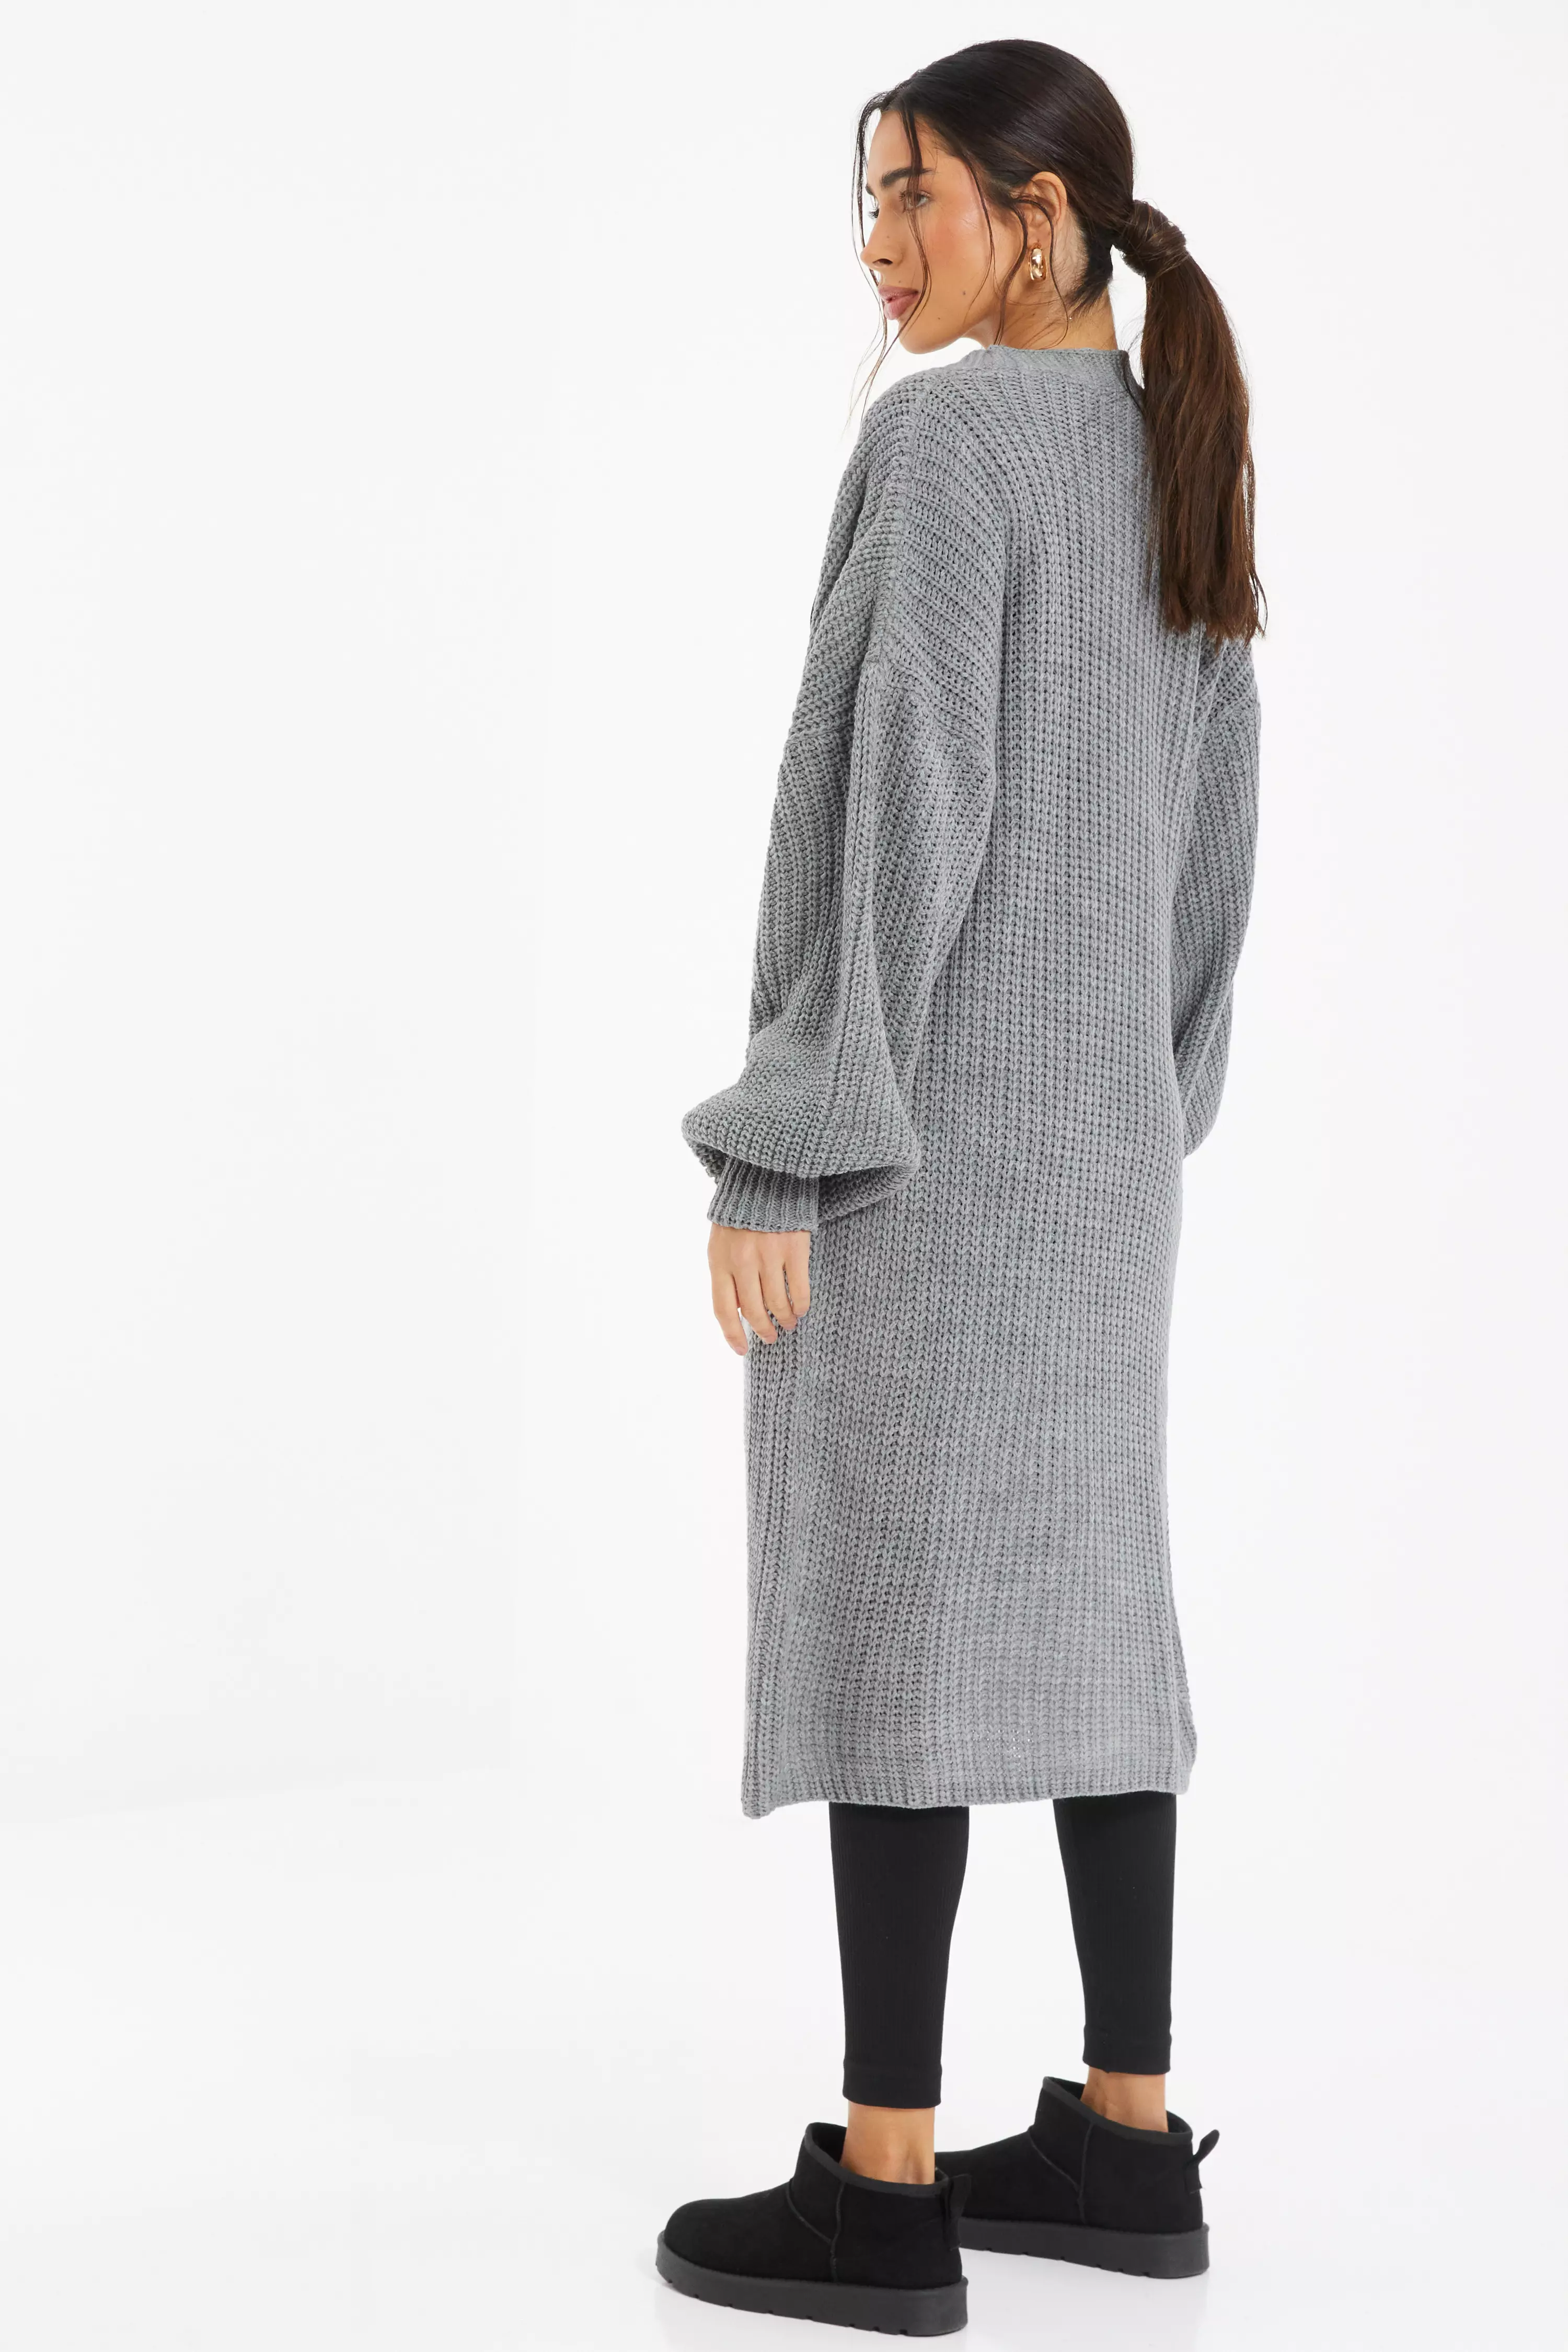 Grey Long Knitted Cardigan - QUIZ Clothing